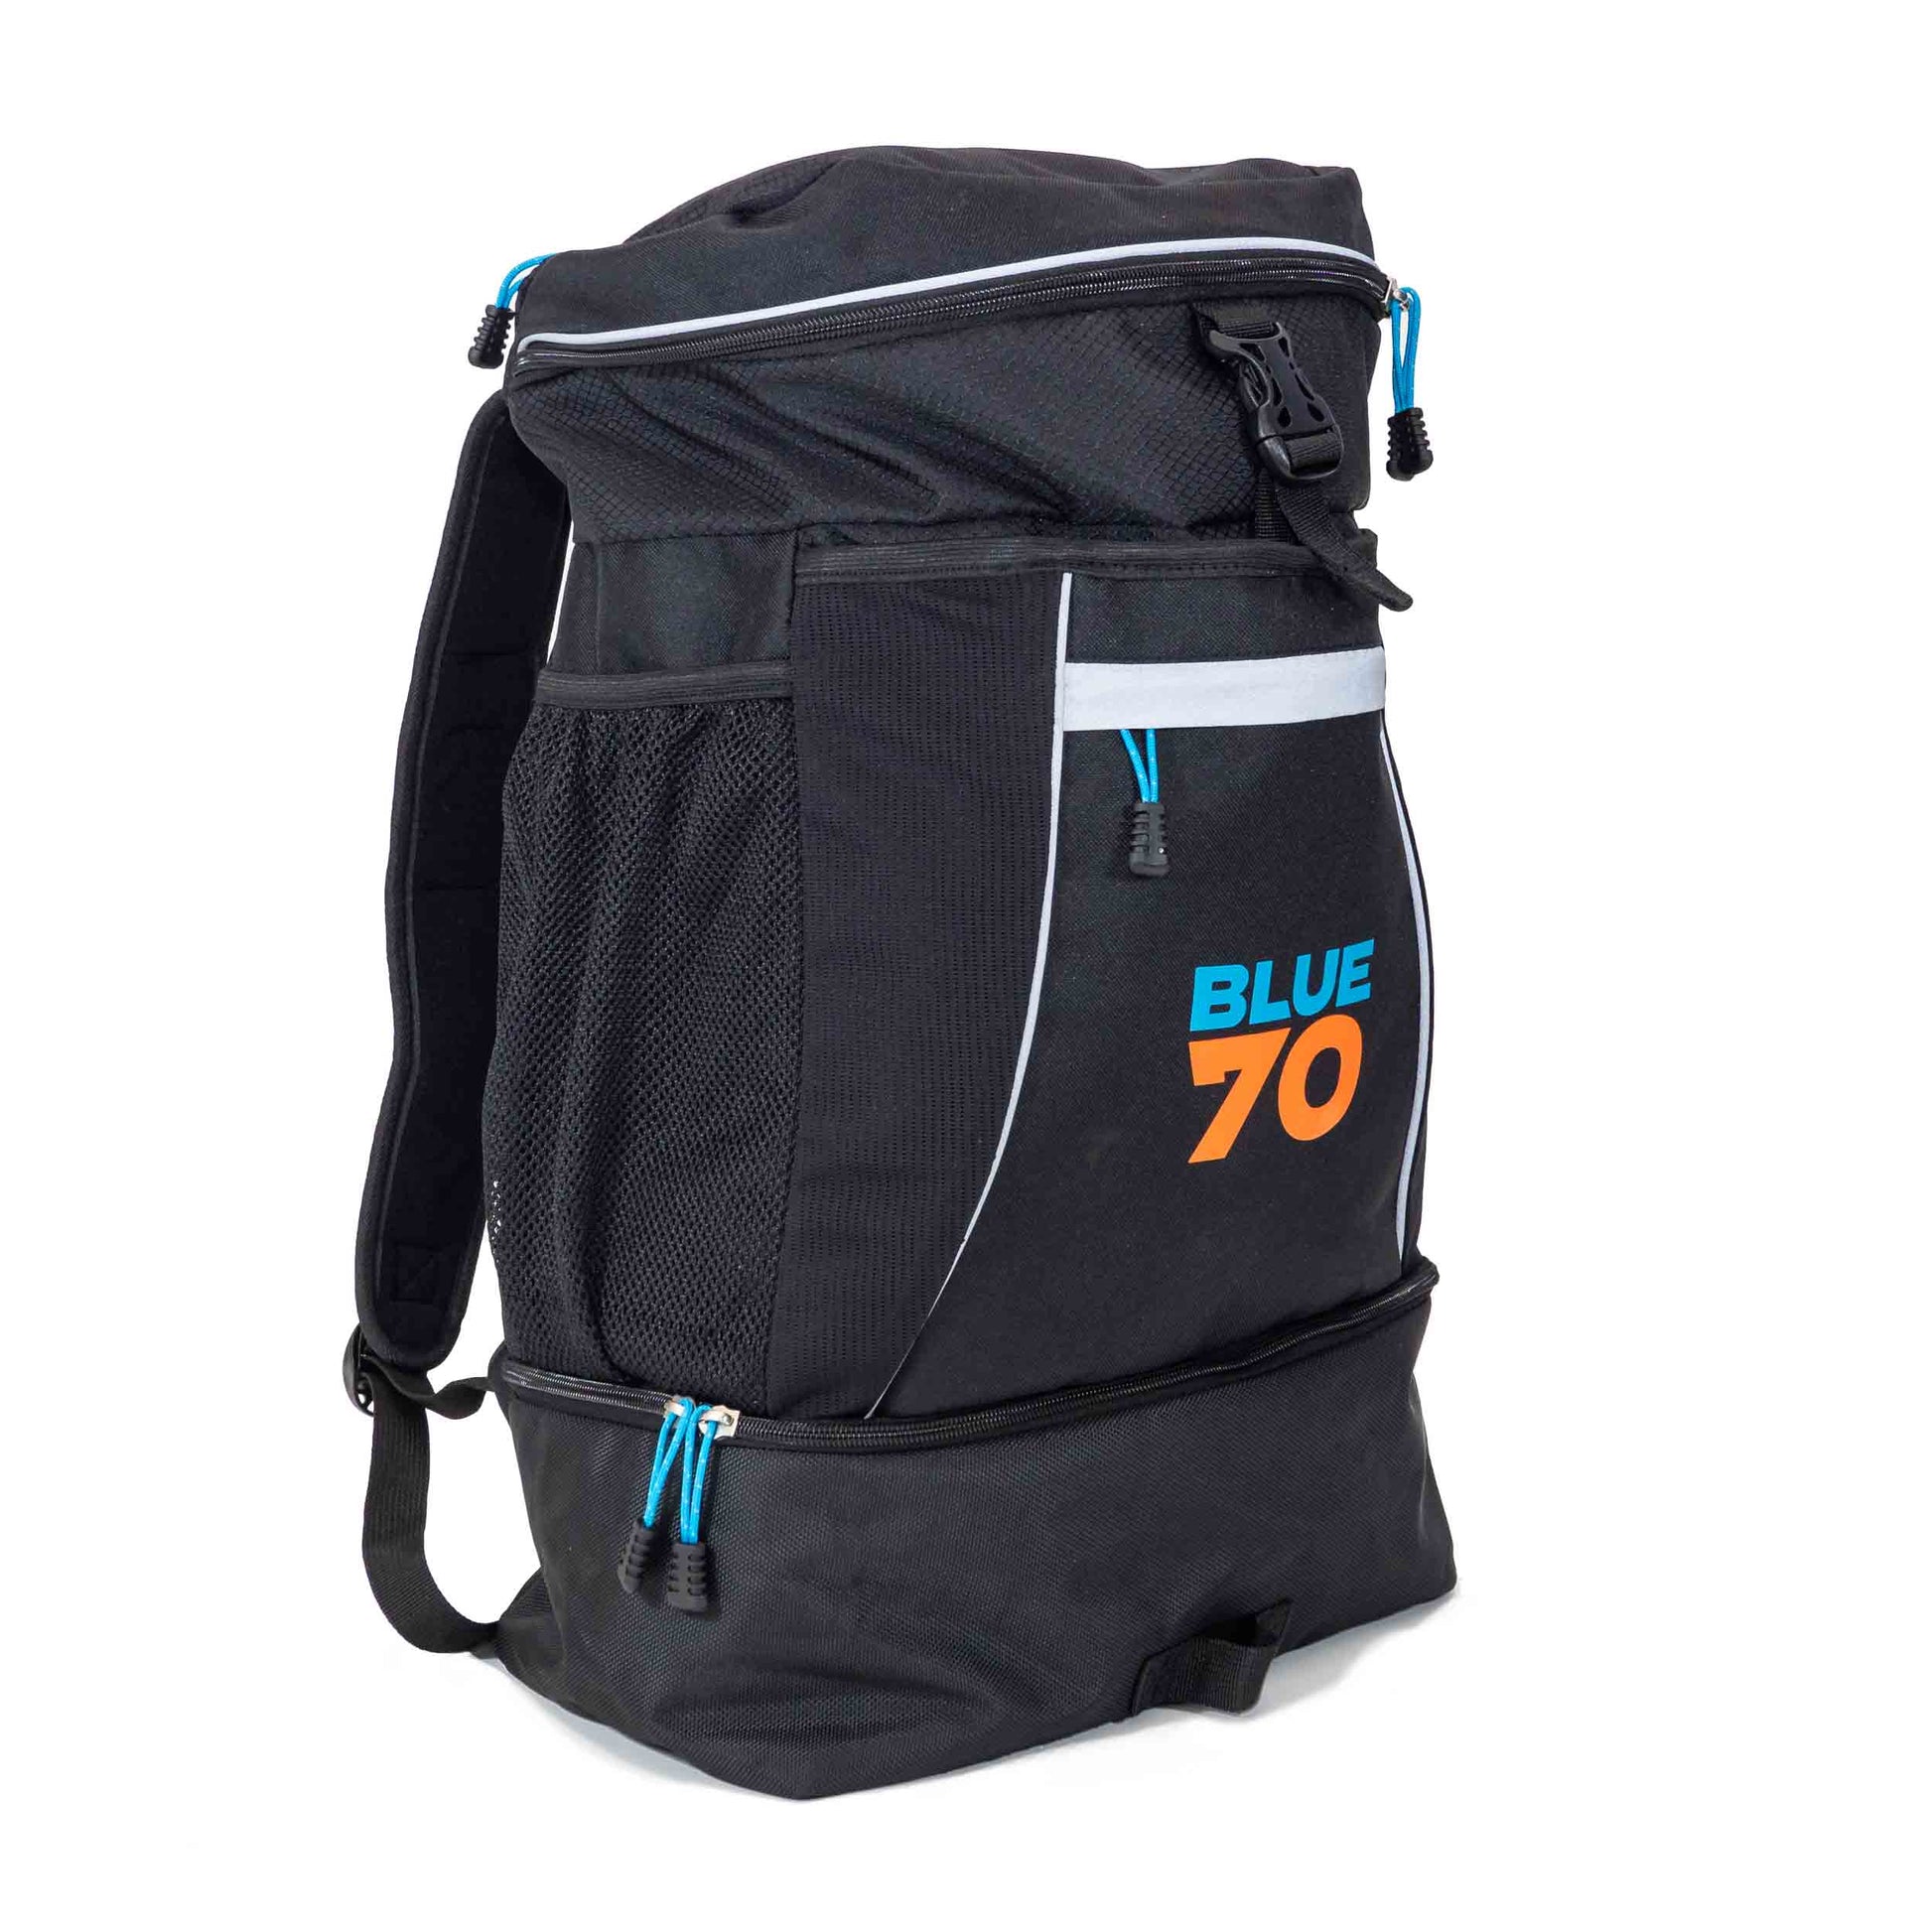 Transition Bag - the Original Backpack | blueseventy – Blueseventy usa